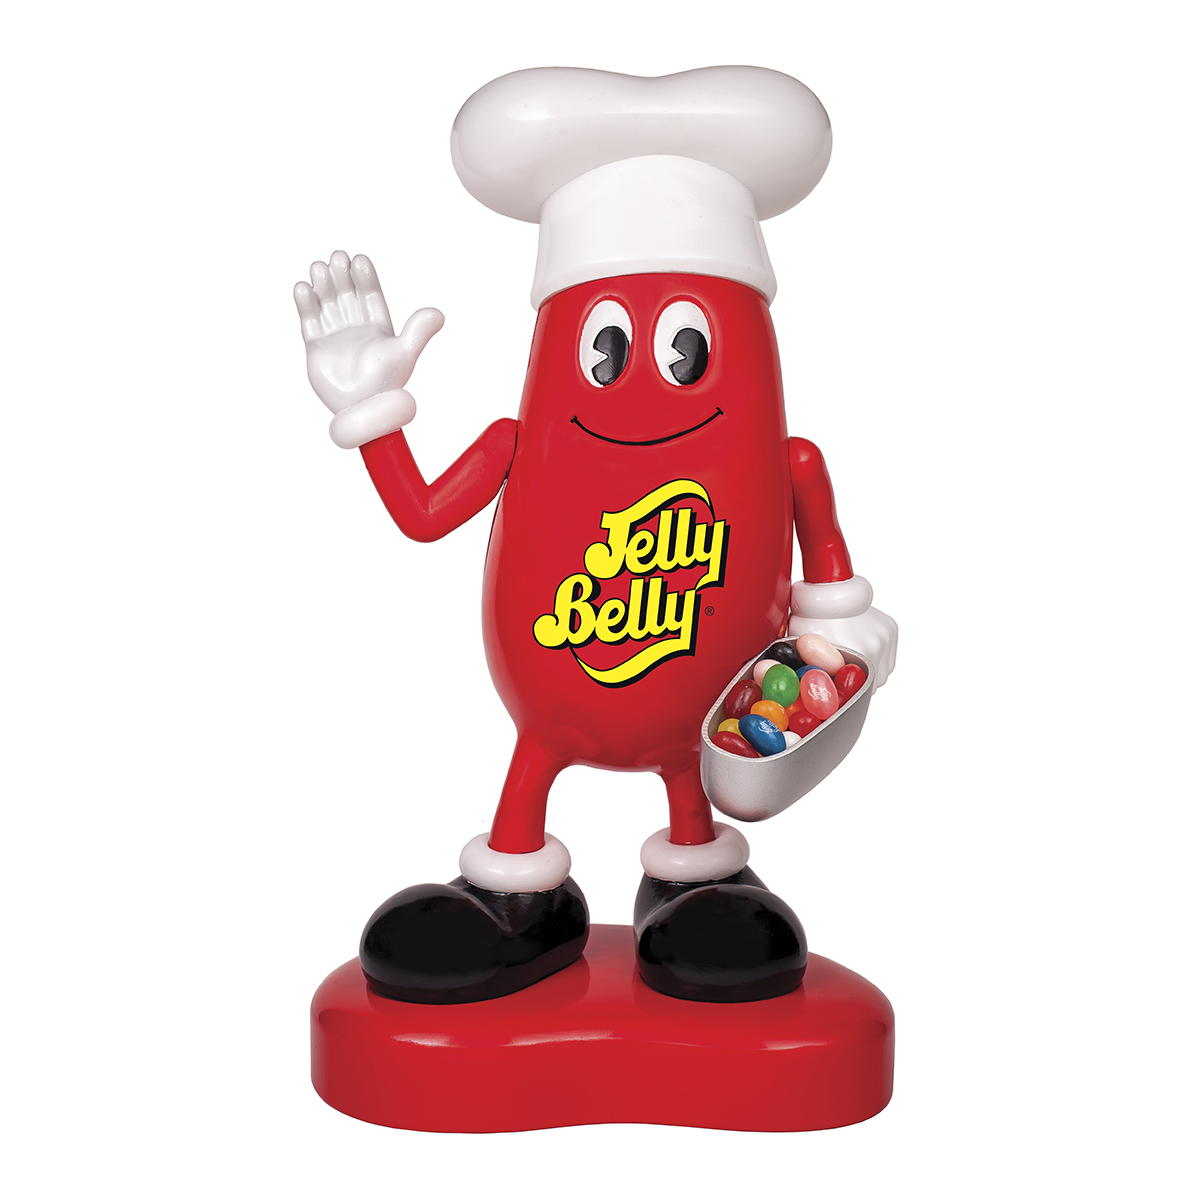 Jelly Belly Mr Jelly Belly Bean Machine Candy Vending Dispenser 1 oz Sample 